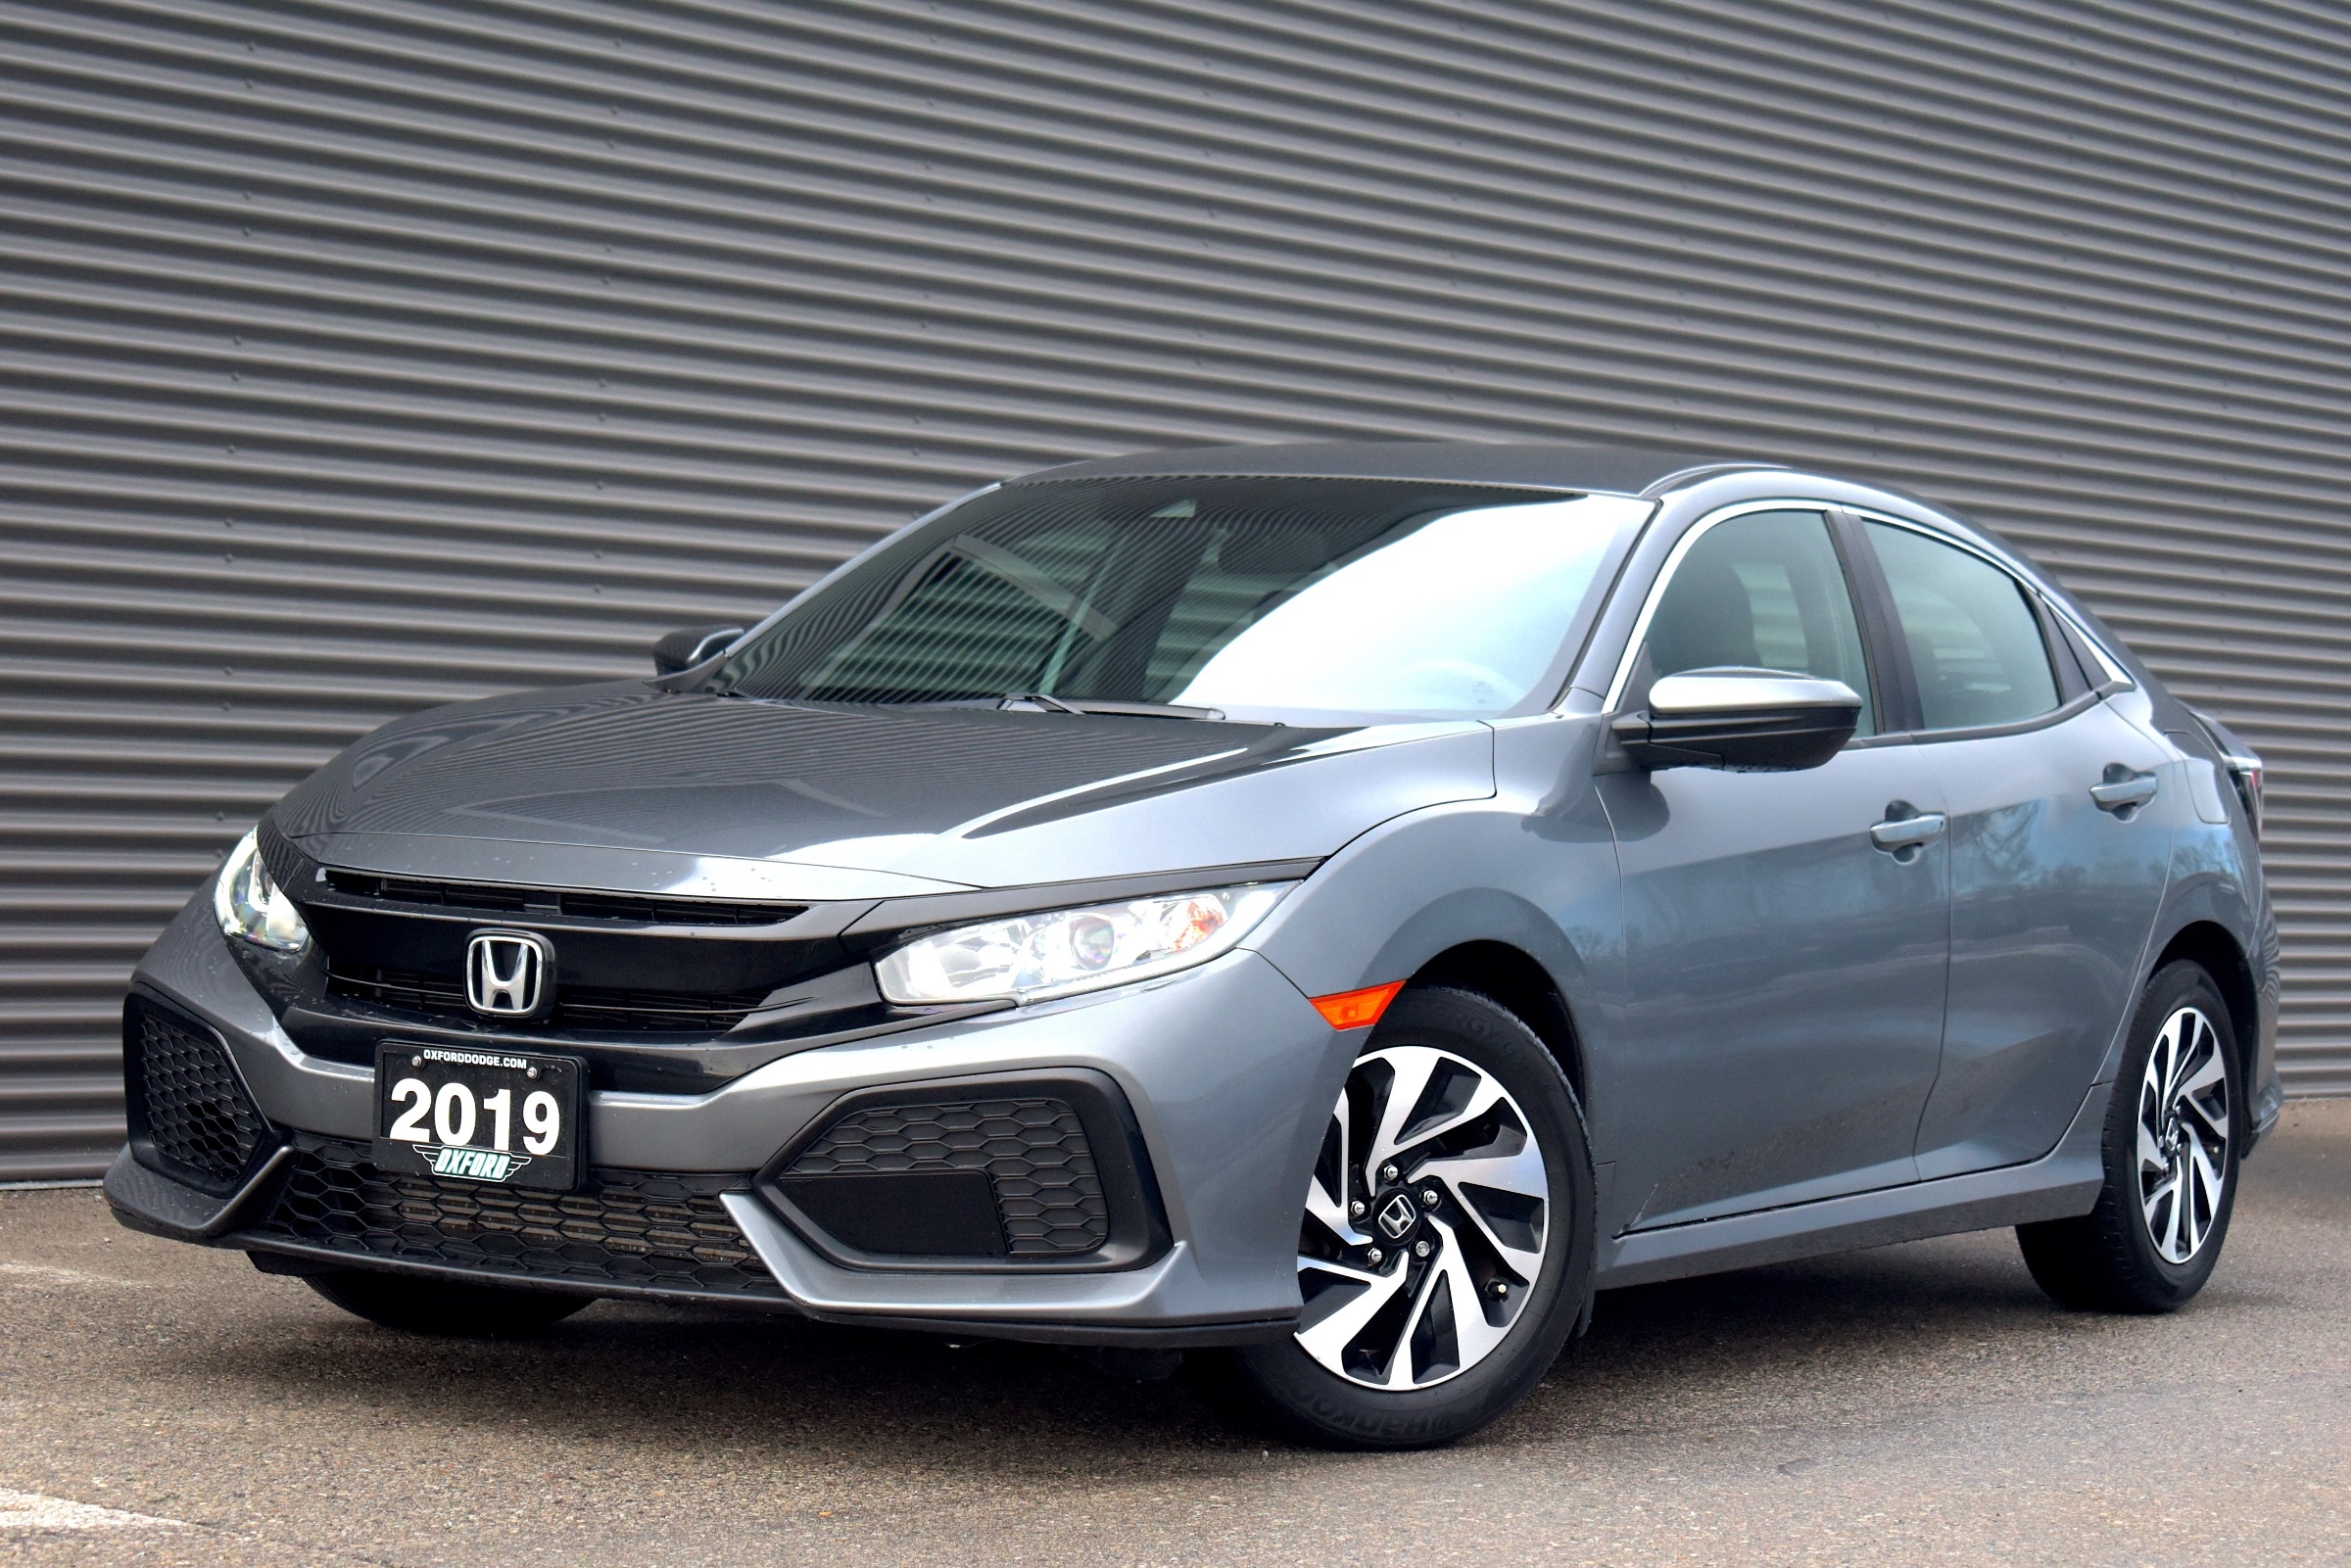 2019 Honda Civic LX Fuel Efficient Hatchback